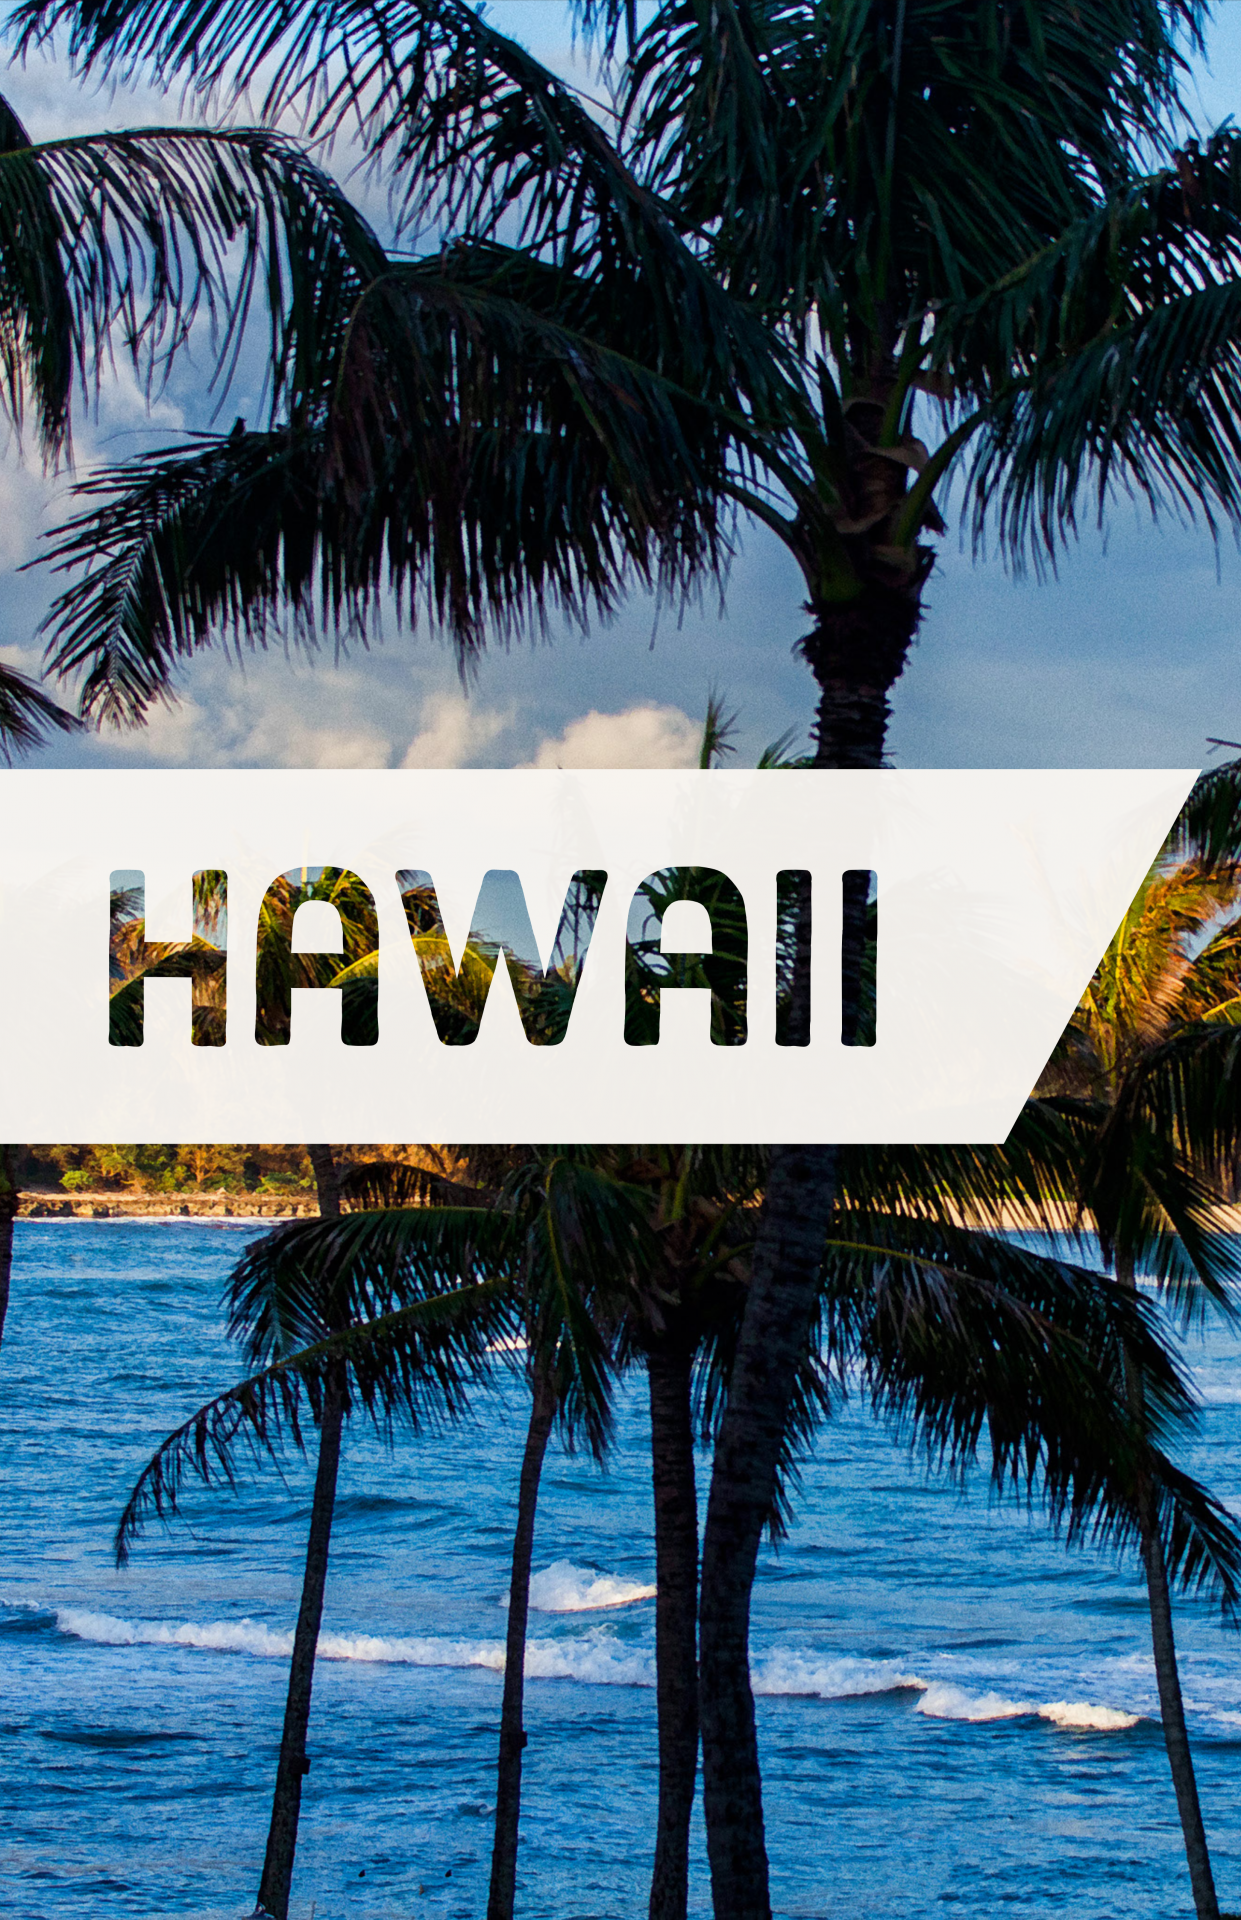 Hawaii Travel Poster